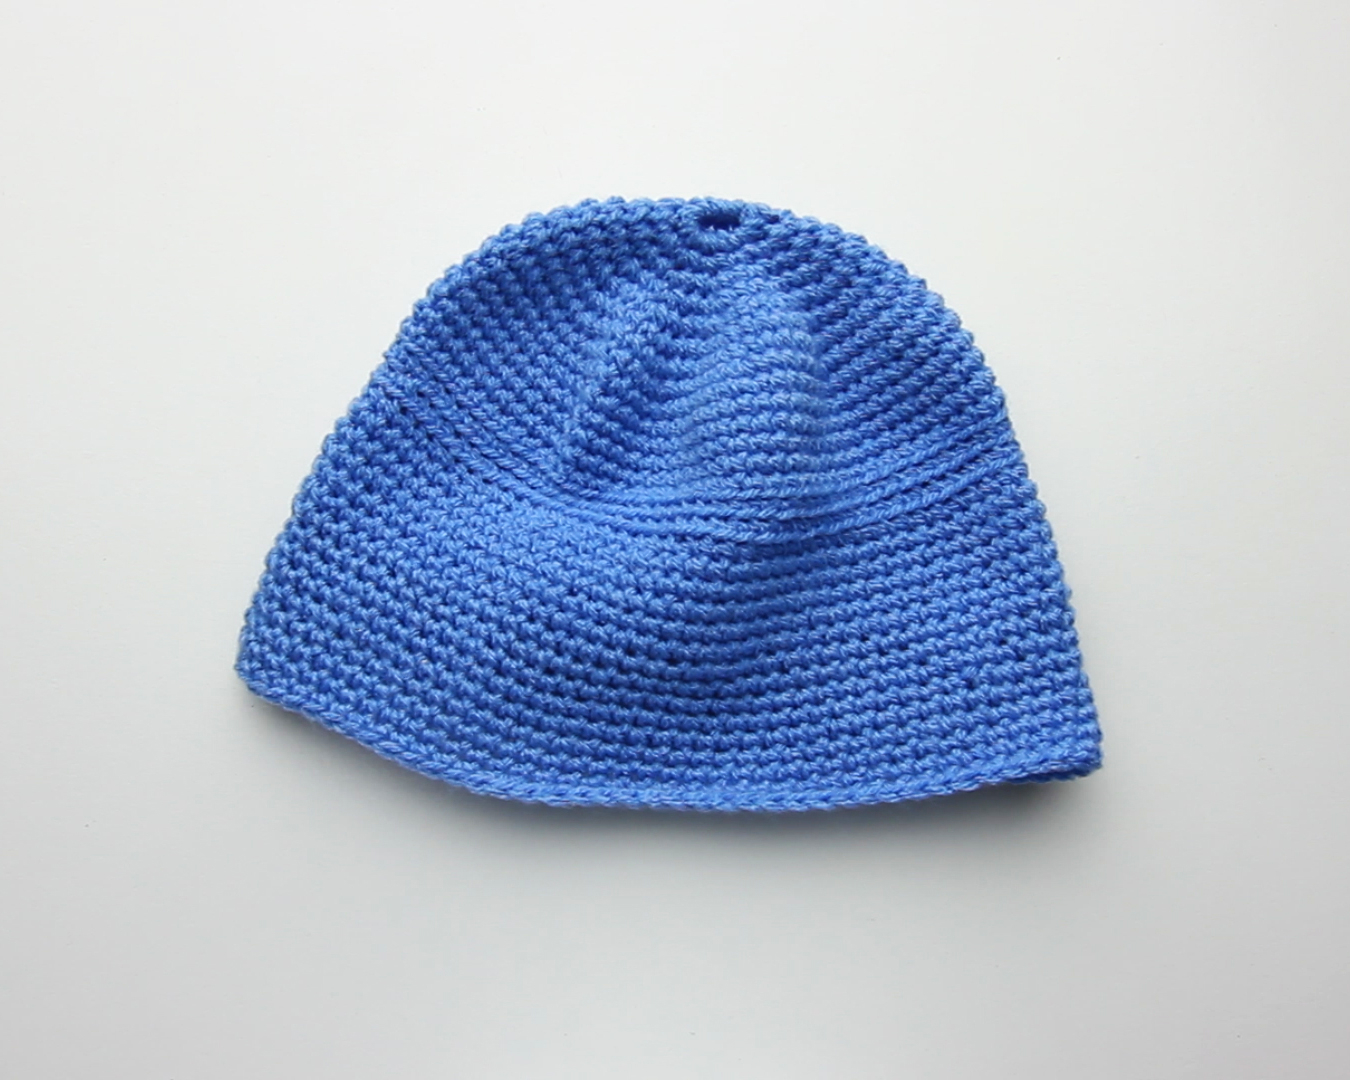 Single Crochet Hat Pattern 3 Simple Ways To Crochet A Hat For Beginners Wikihow